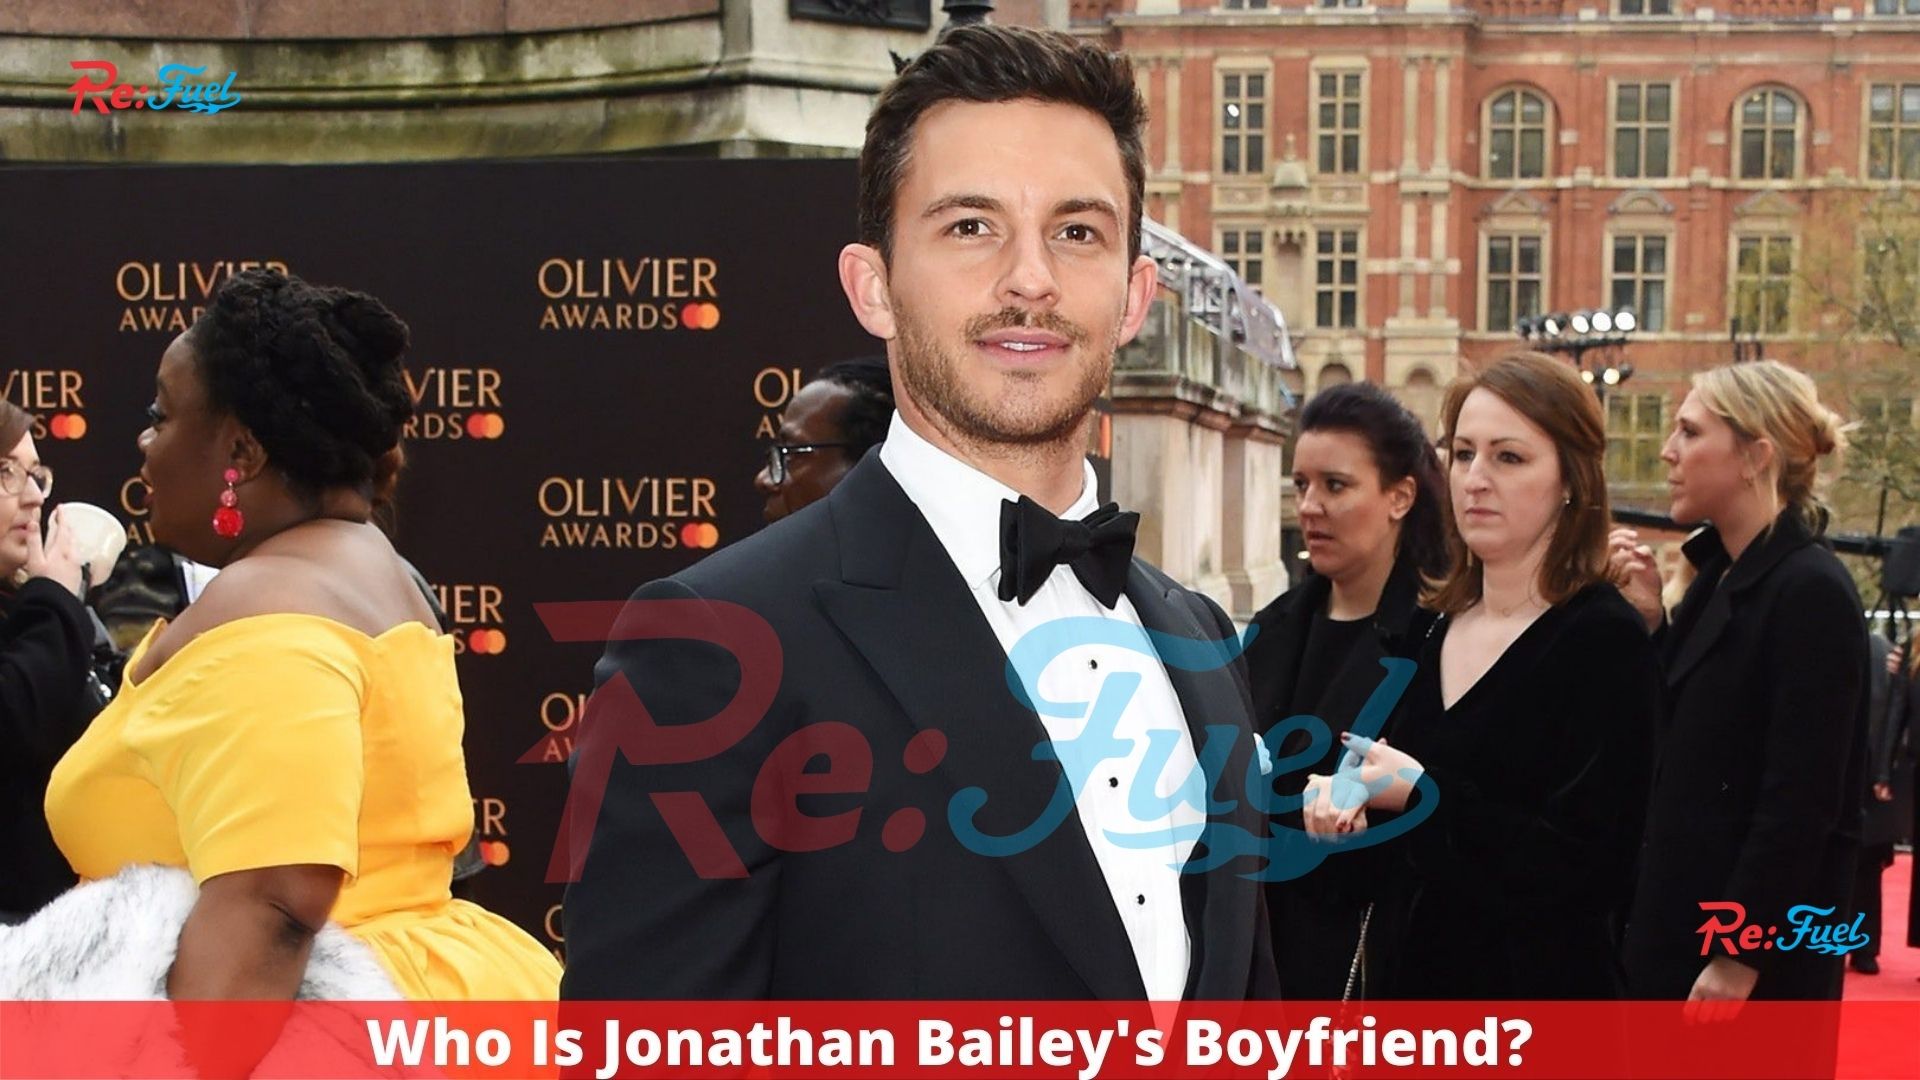 Who Is Jonathan Bailey’s Boyfriend?